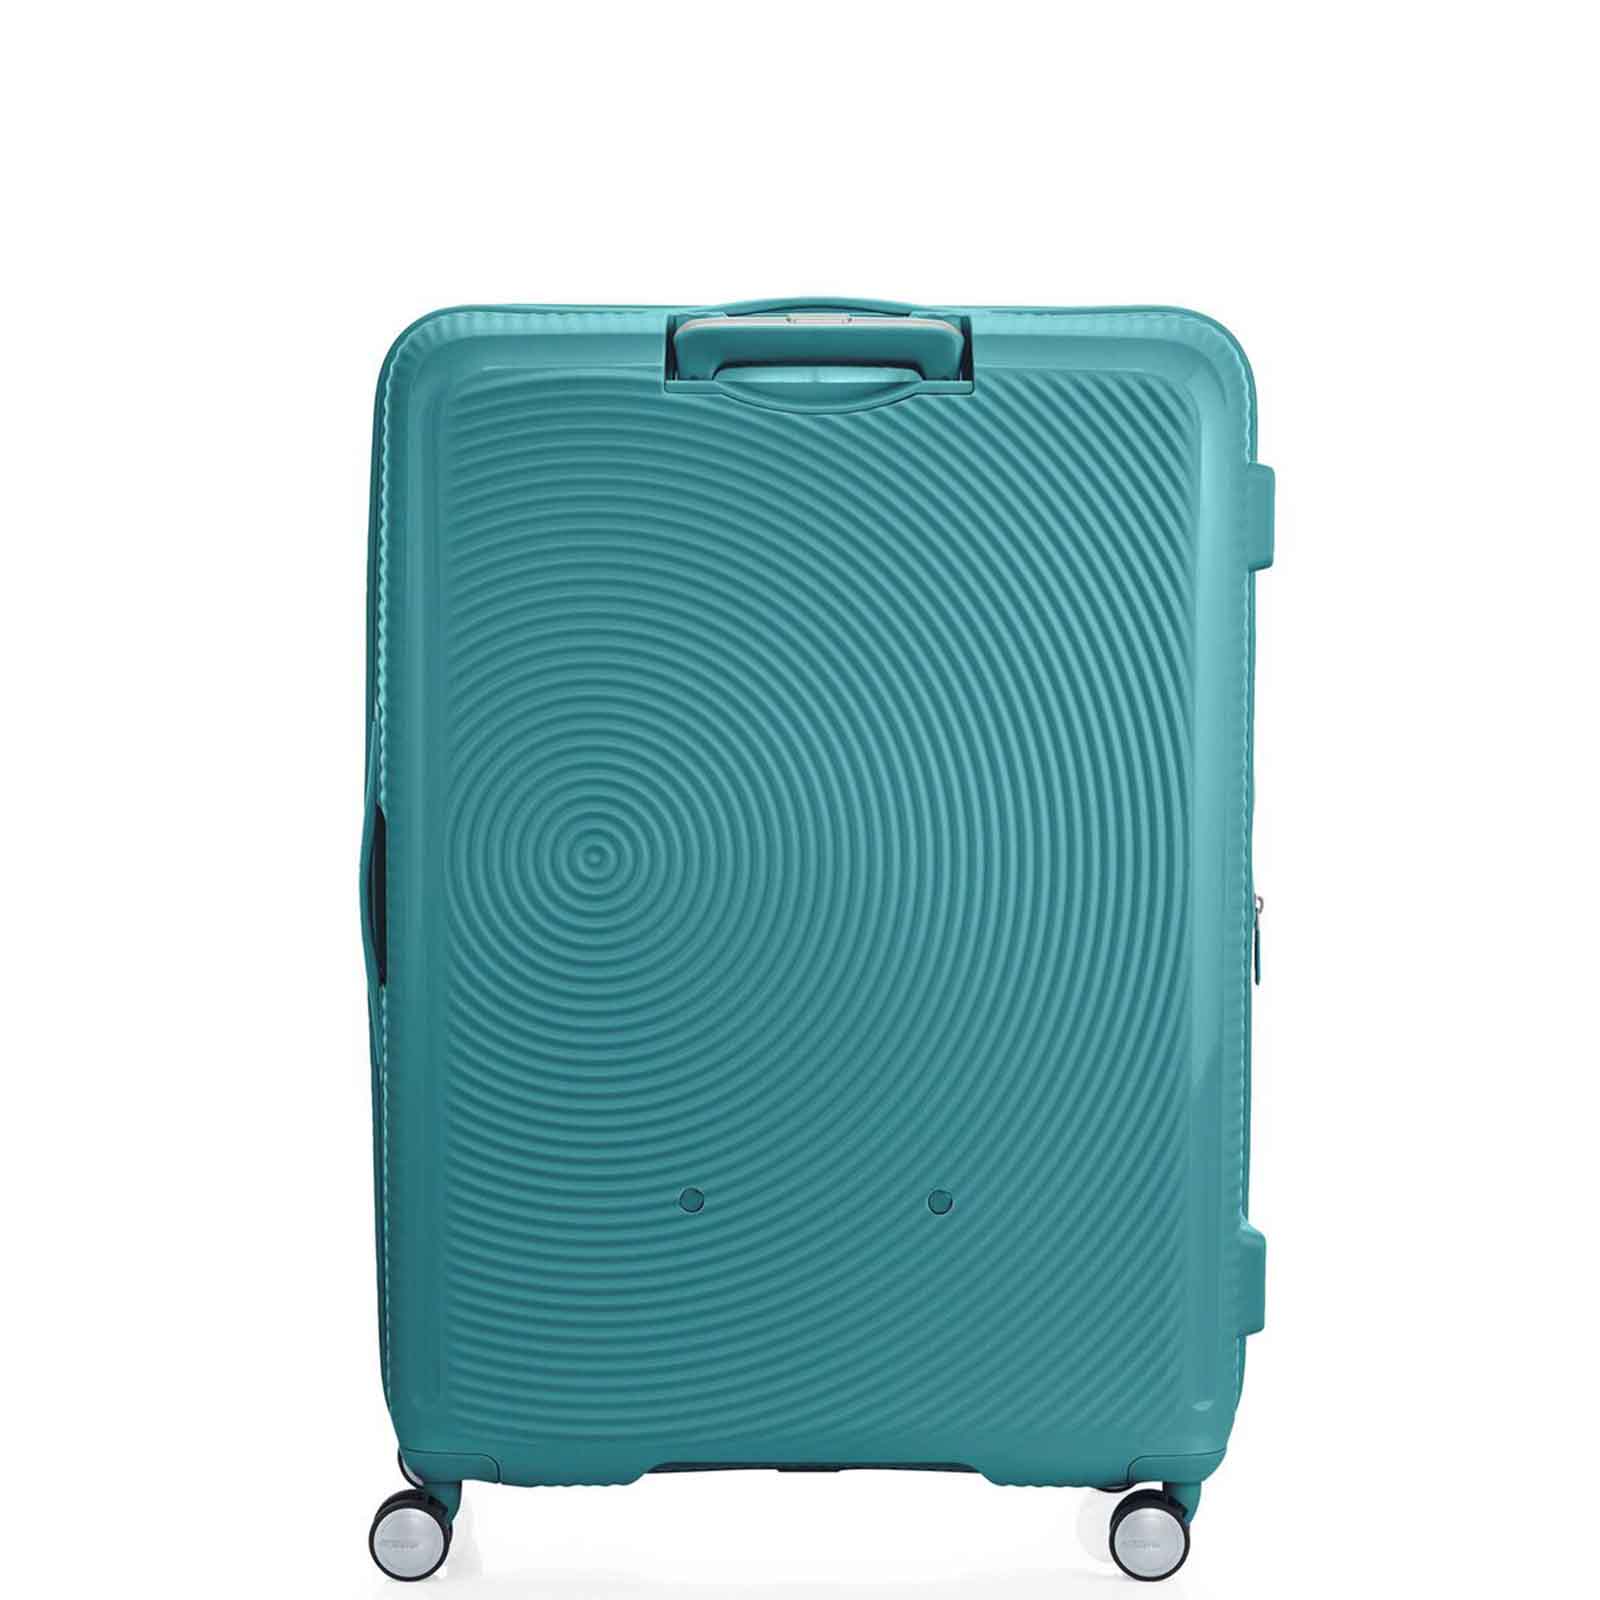 American-Tourister-Curio-2-80cm-Suitcase-Jade-Green-Back